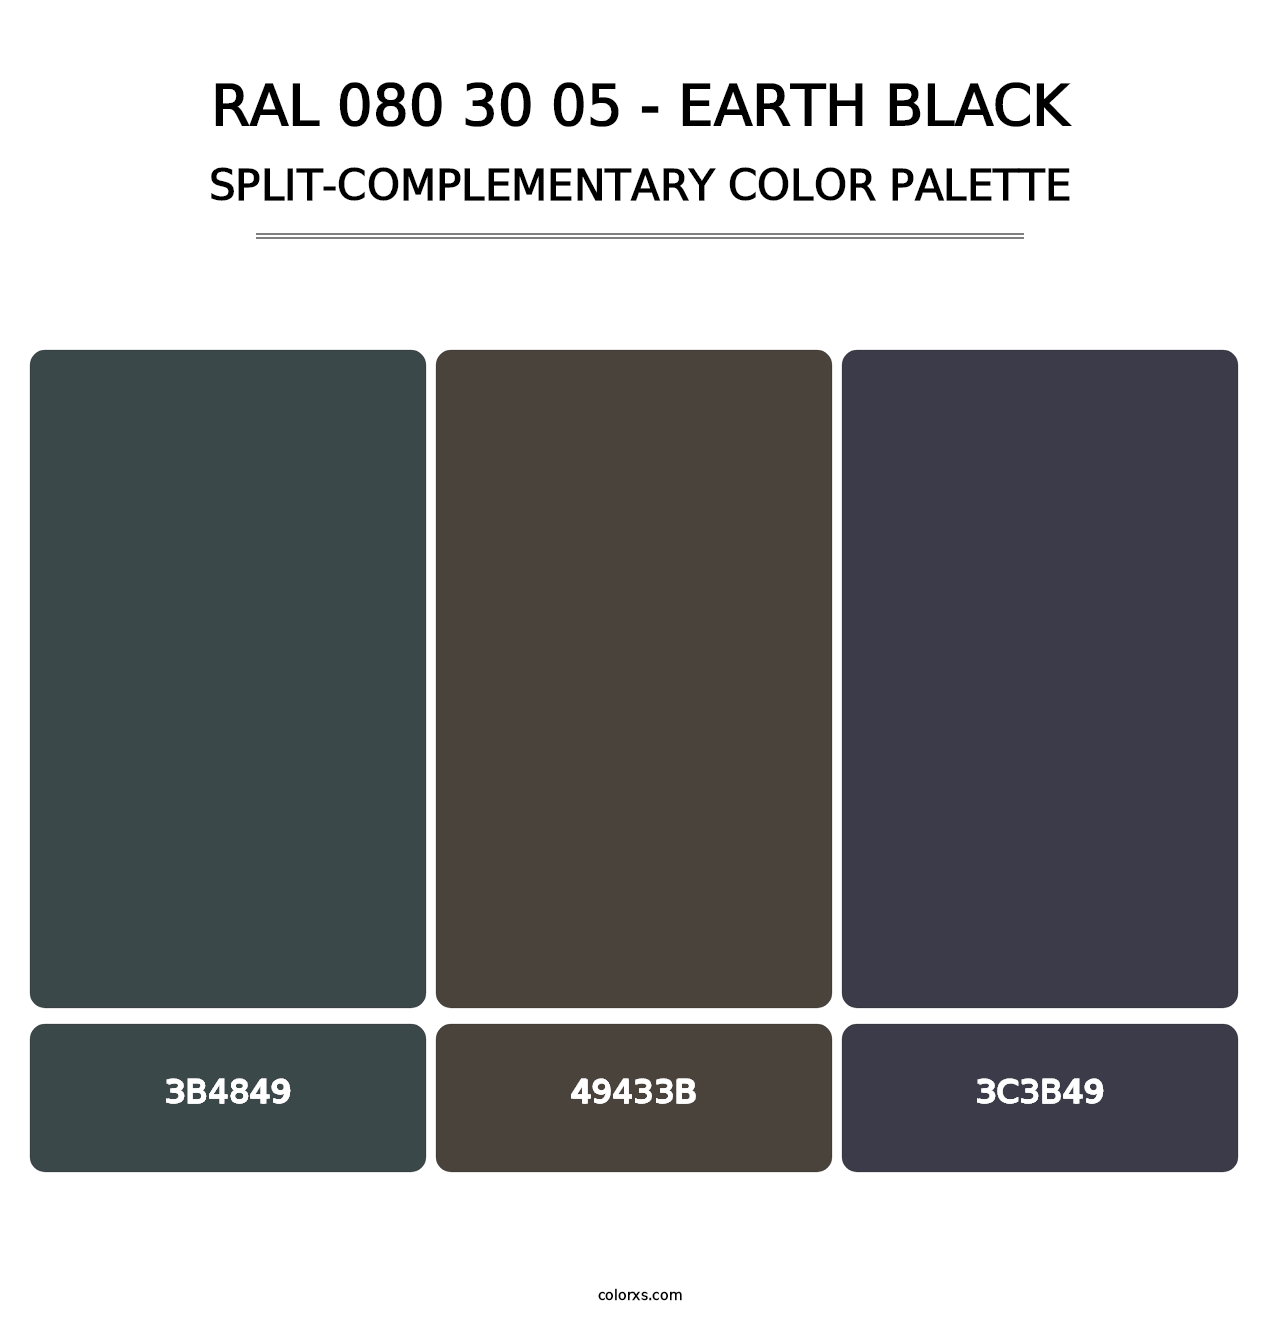 RAL 080 30 05 - Earth Black - Split-Complementary Color Palette